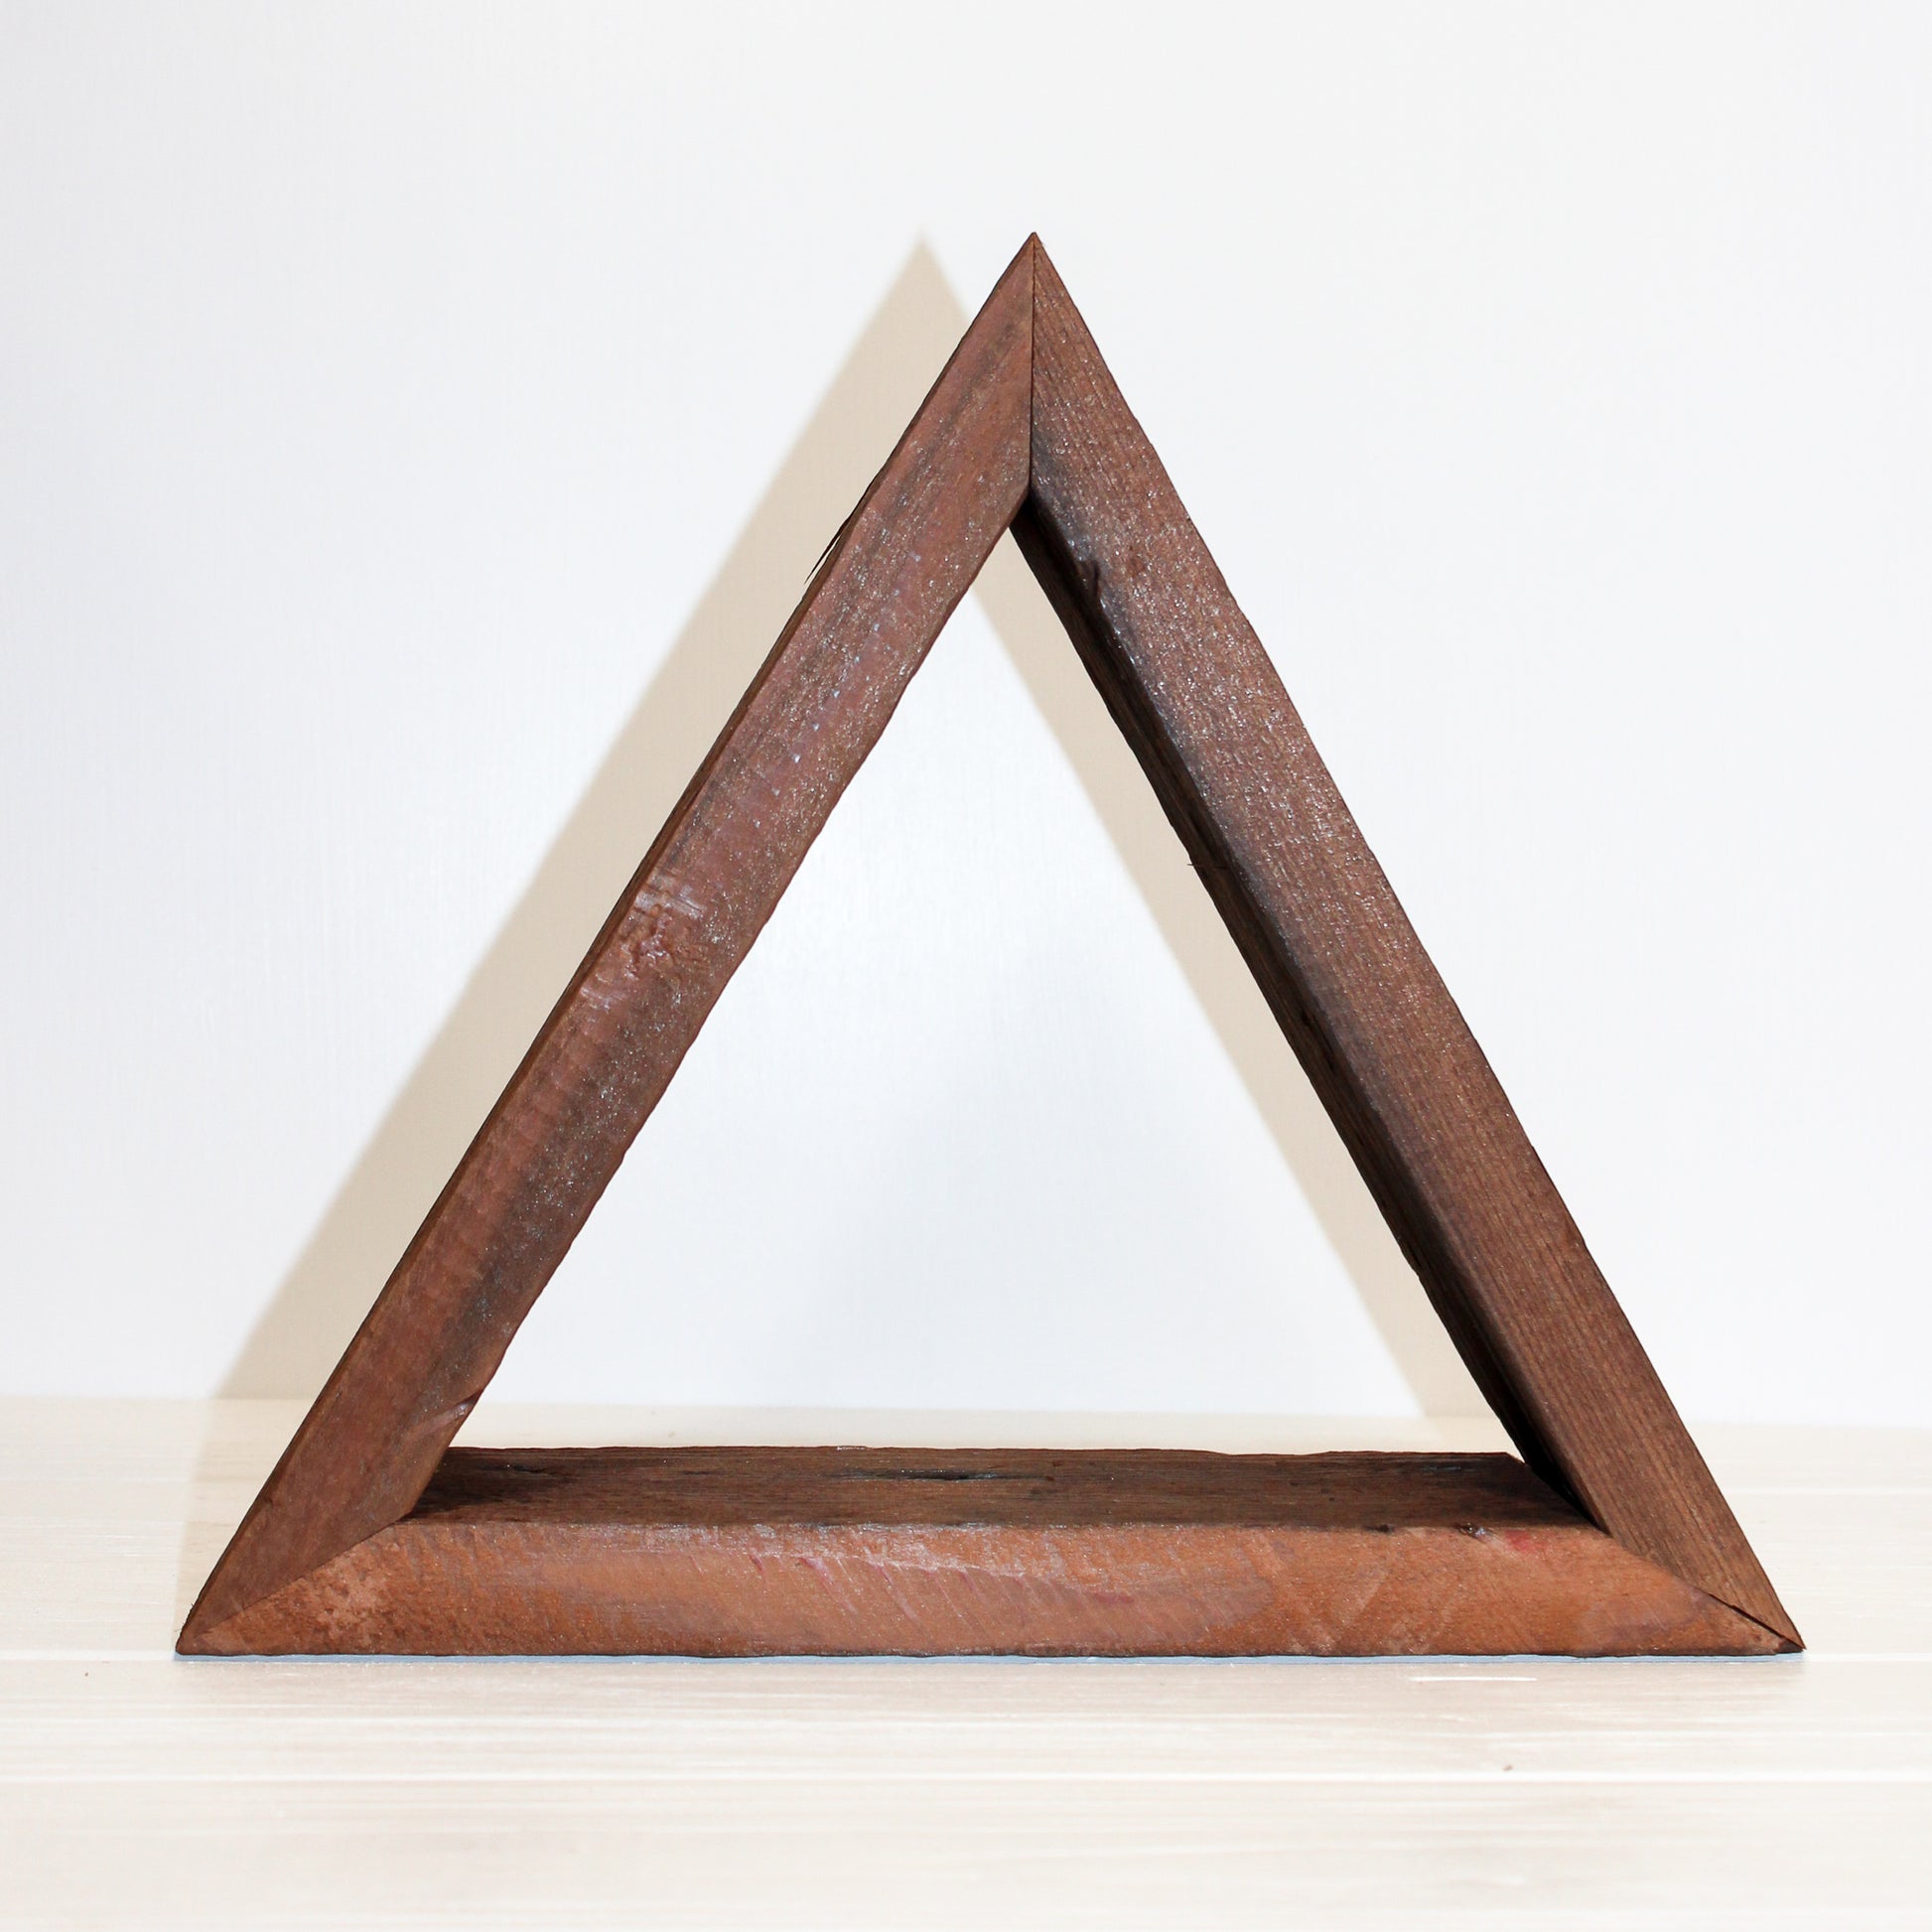 Reclaimed Wood Double Frame 8X8 – Minka